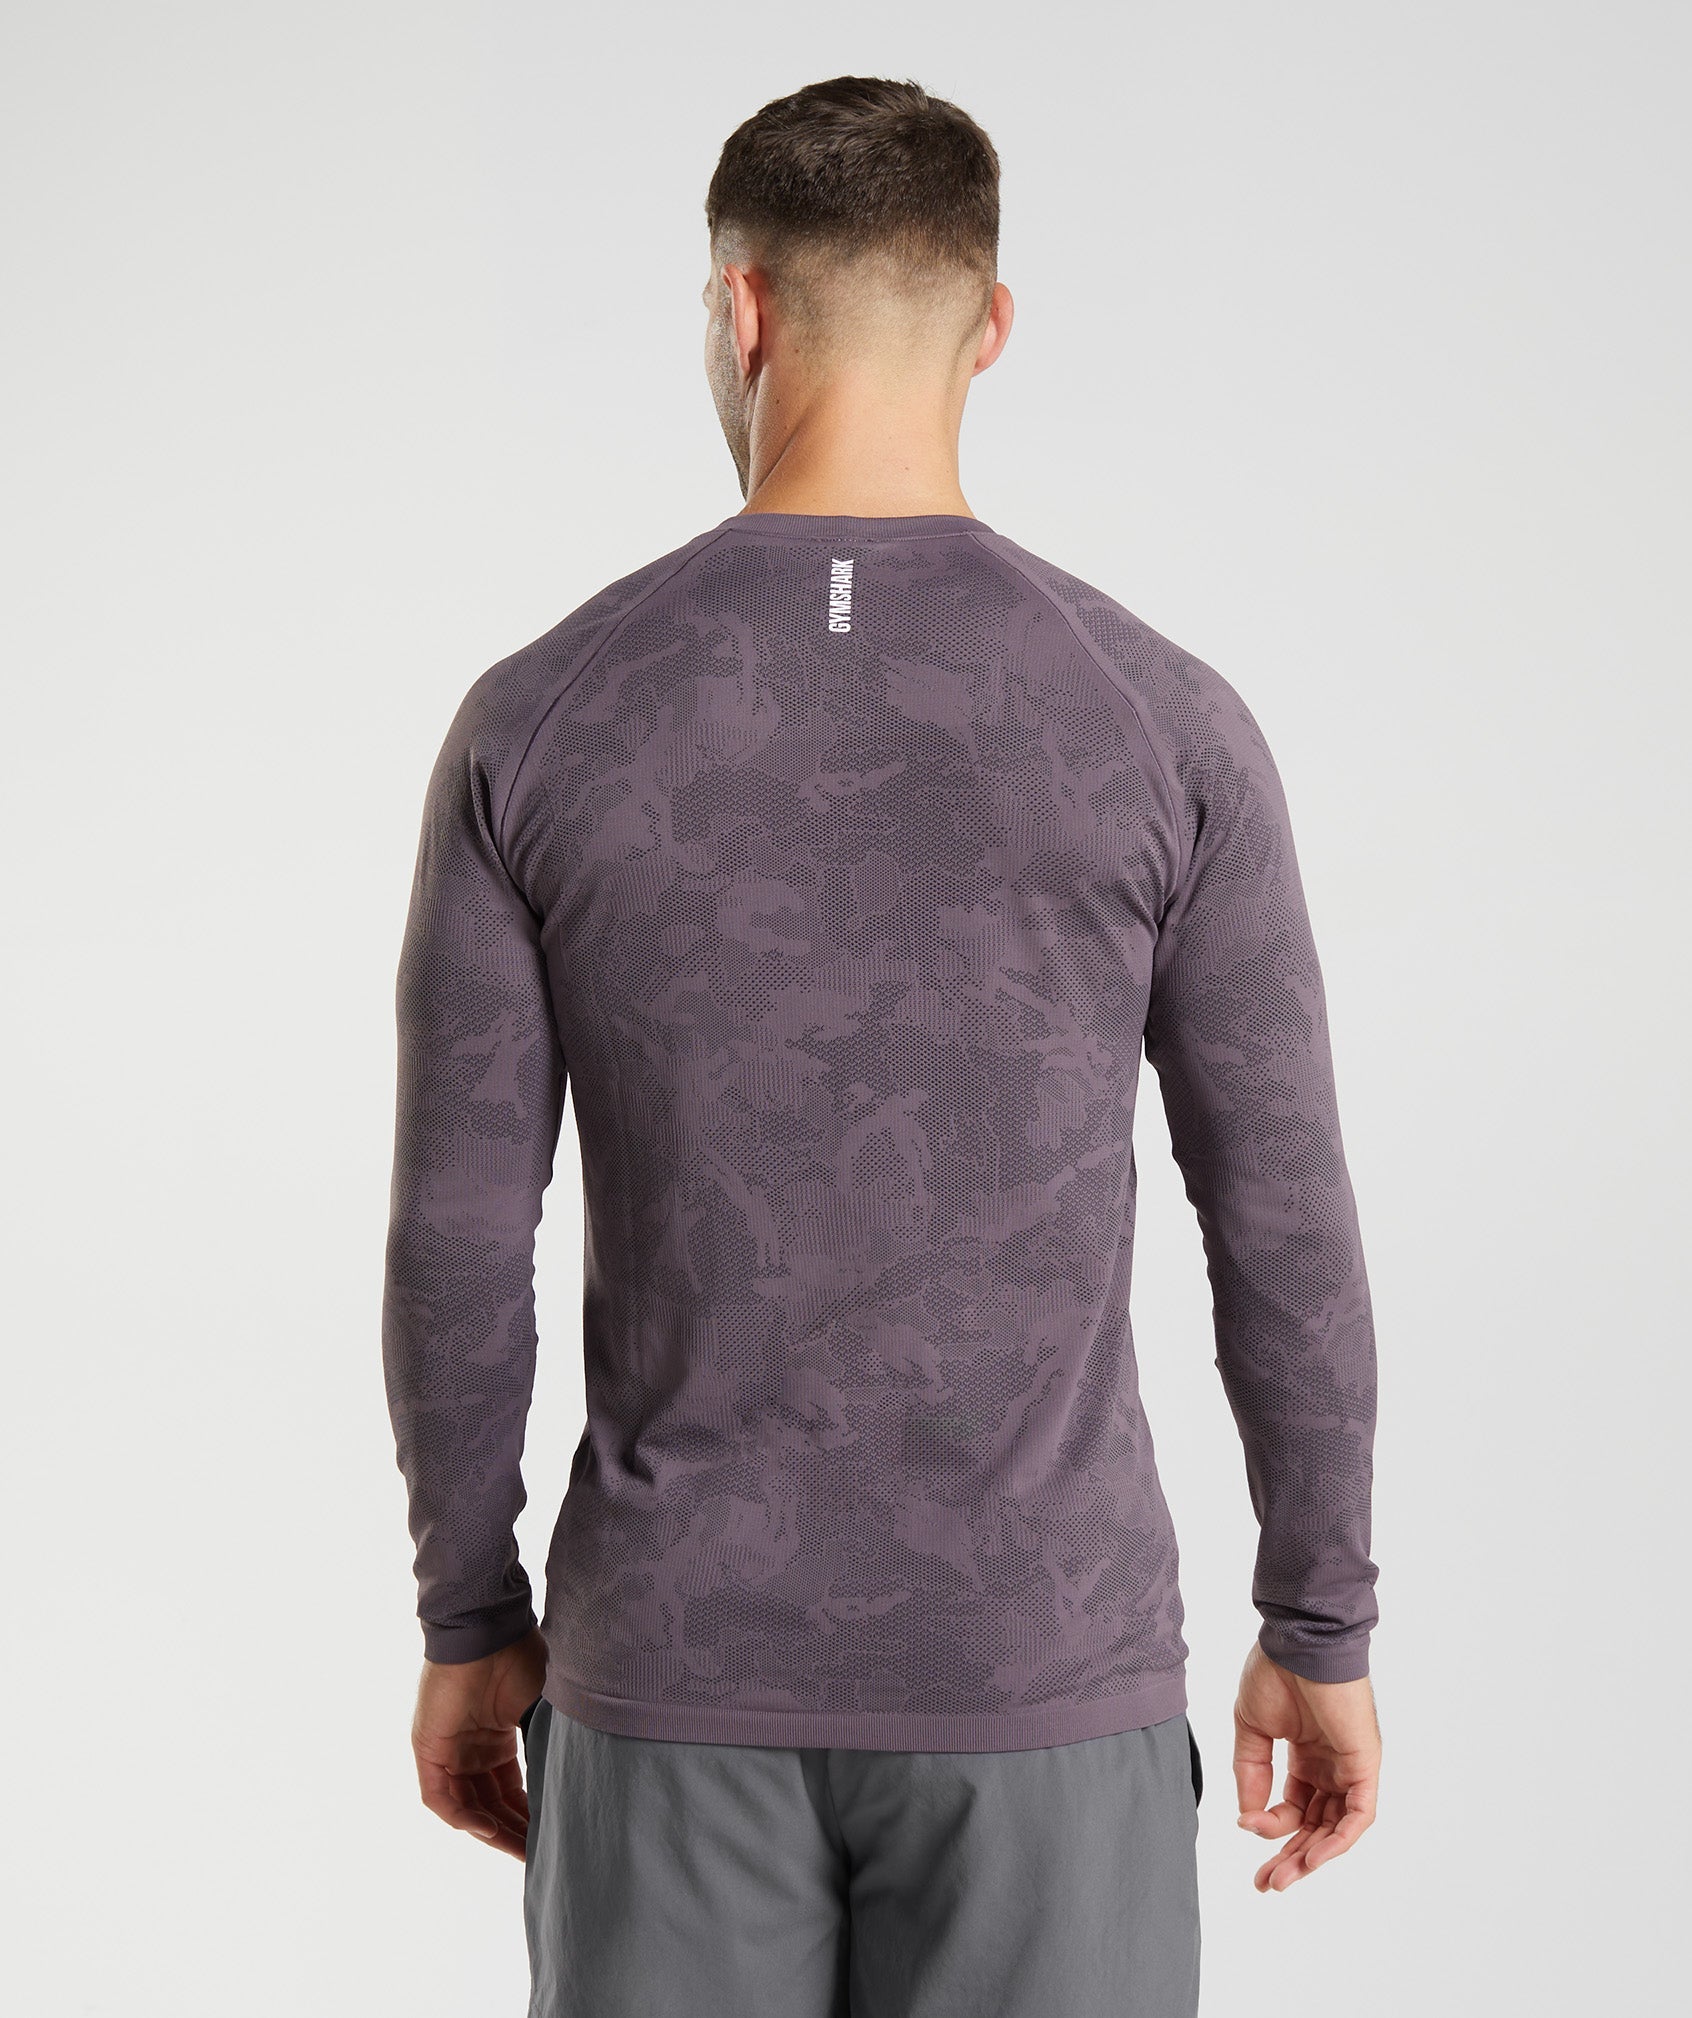 Geo Seamless Long Sleeve T-Shirt in Musk Lilac/Black